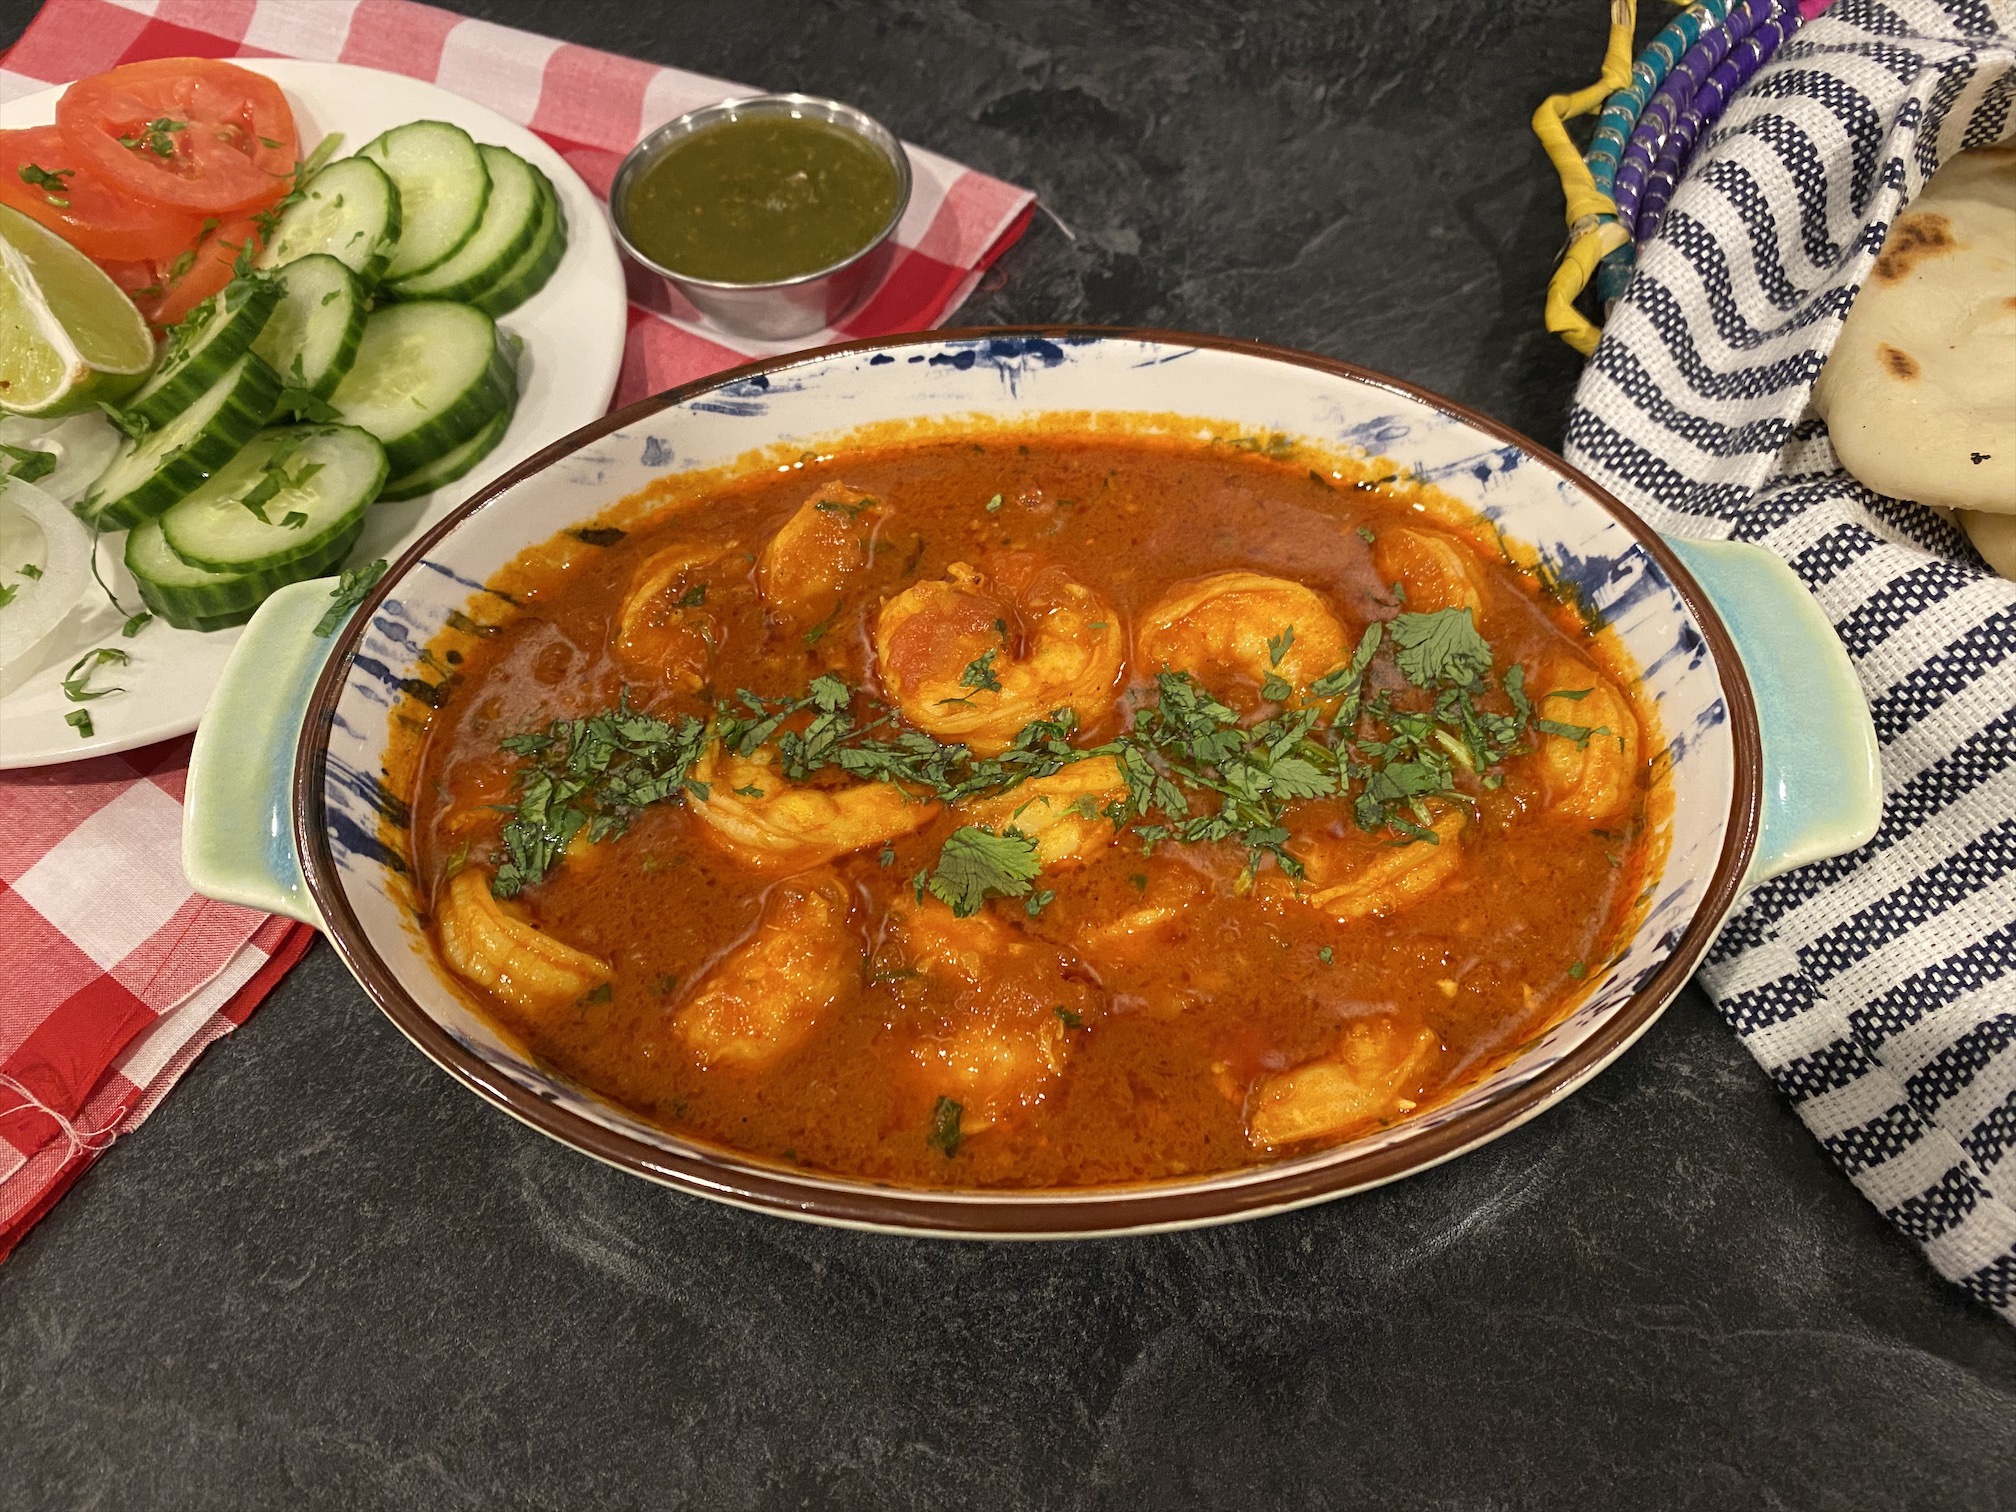 How To Make Prawn Karahi Masala - An Authentic Pakistani & Indian Tomato  Based Curry Recipe - Fatima Cooks